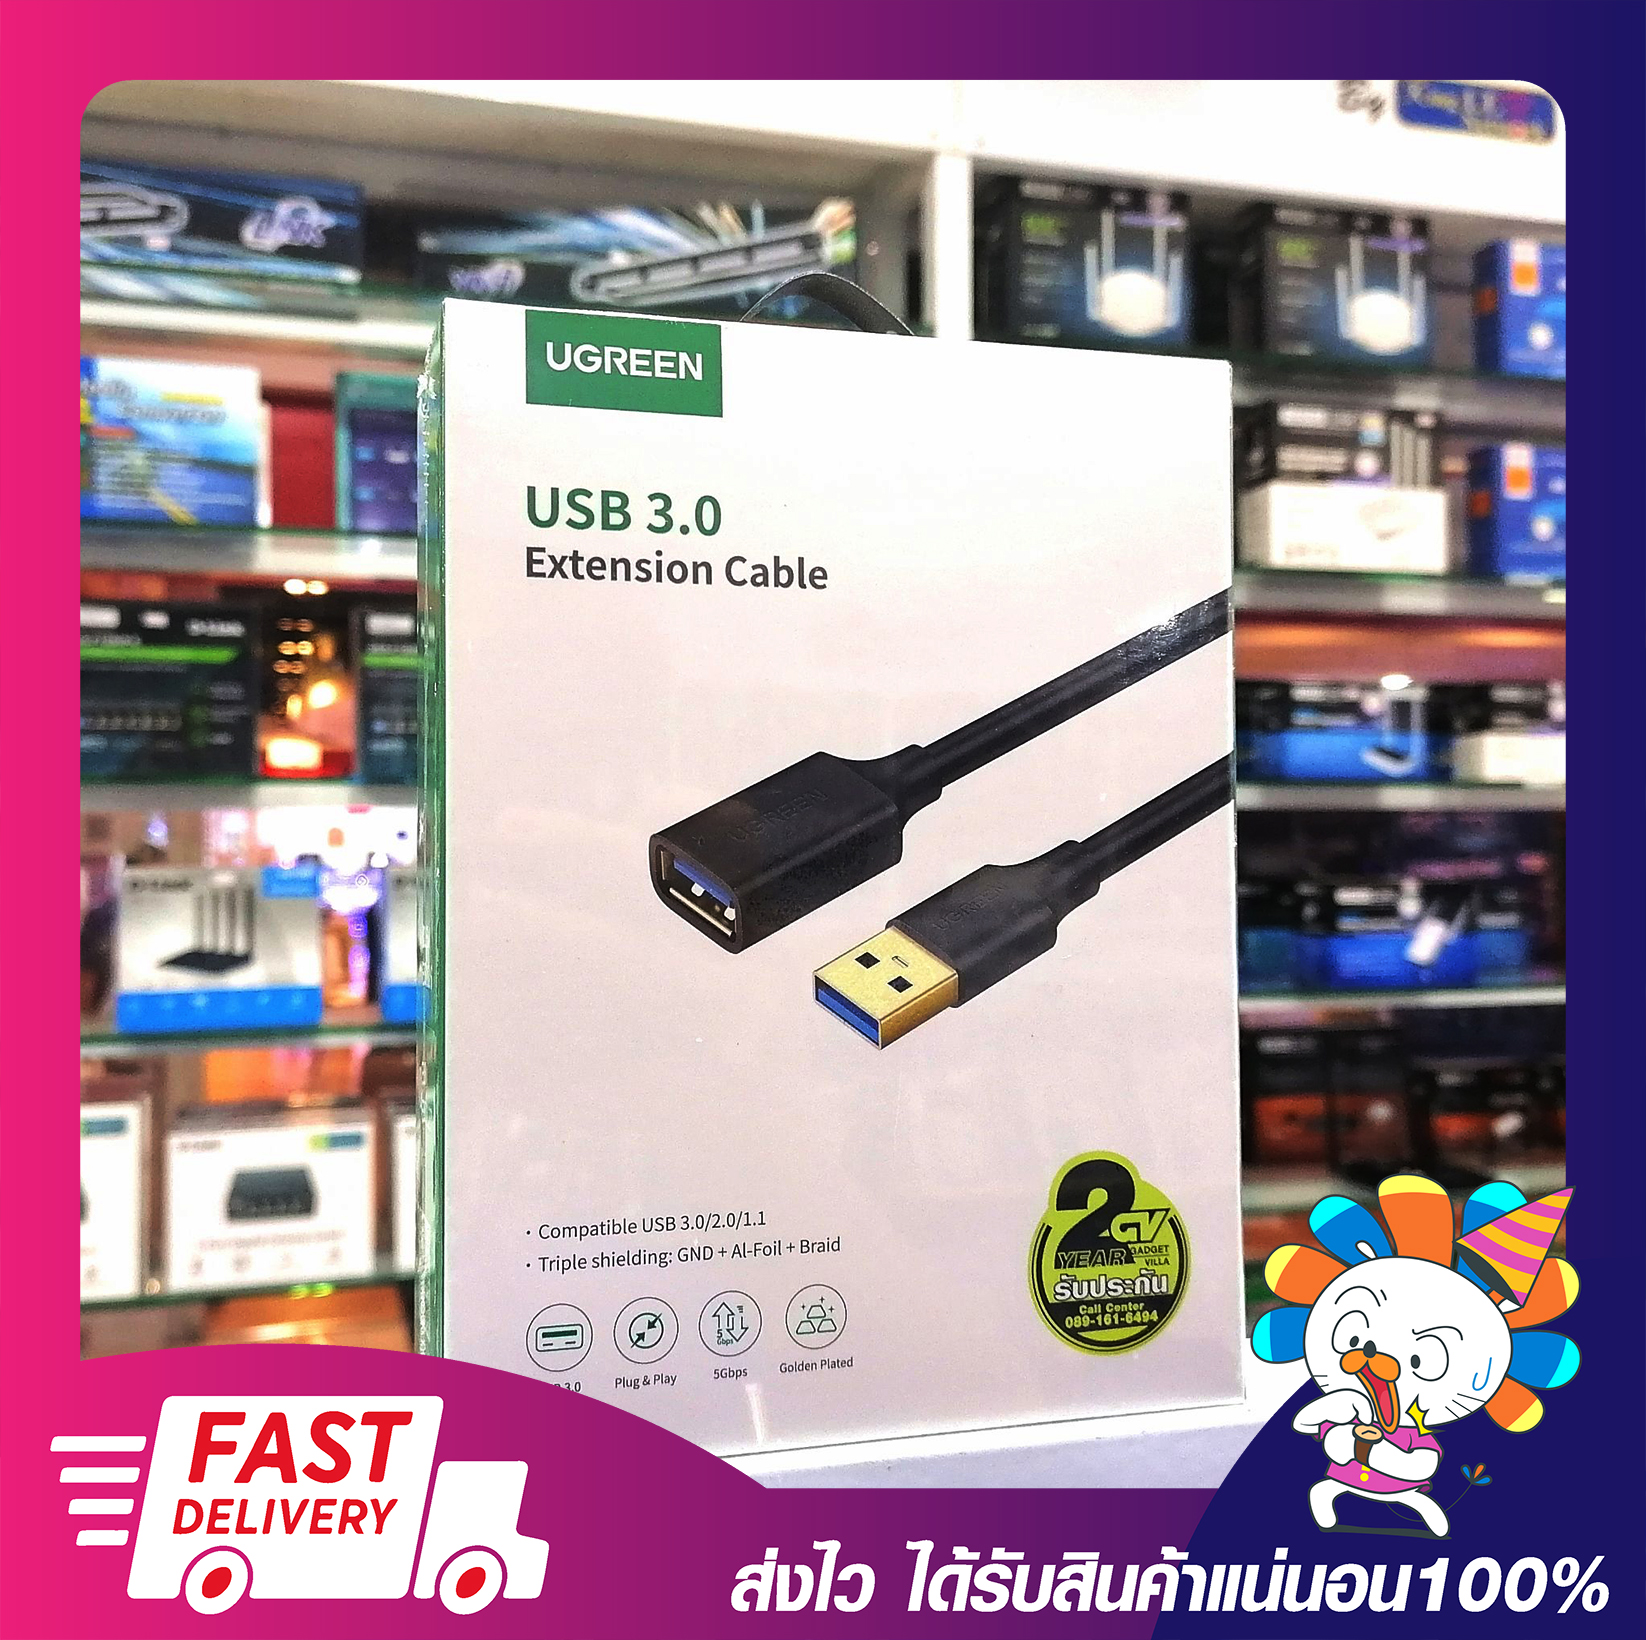 UGREEN USB 3.0 A Male to Female Fast Cable 1.5 - 3M สายต่อเพิ่มความยาว USB 3.0 ตัวผู้ เป็น ตัวเมีย 1.5 - 3 เมตร รับประกัน 2 ปี